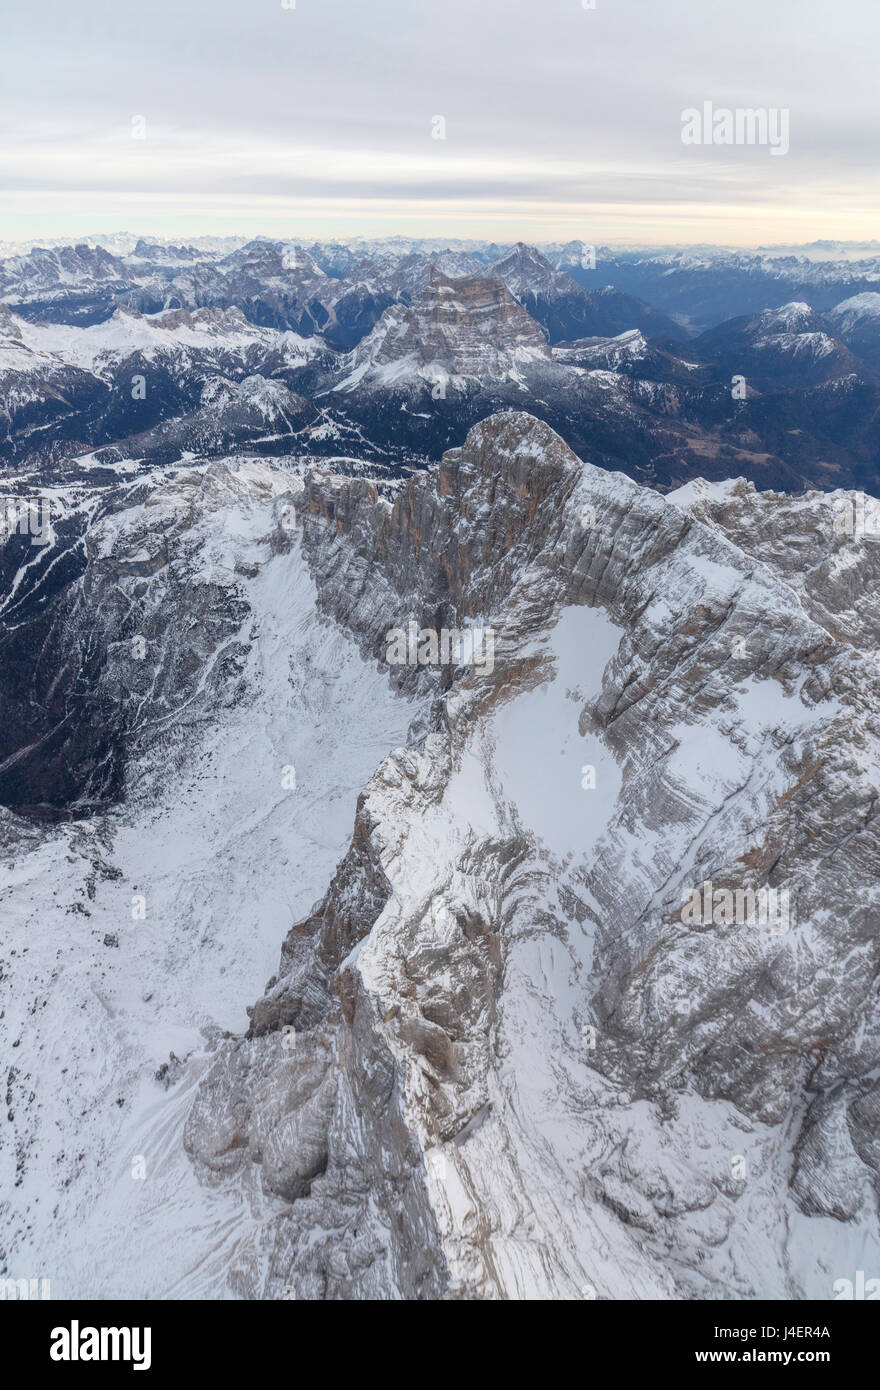 Aerial view of the rocky peaks of Monte Civetta, Ampezzo, Dolomites, Province of Belluno, Veneto, Italy, Europe Stock Photo